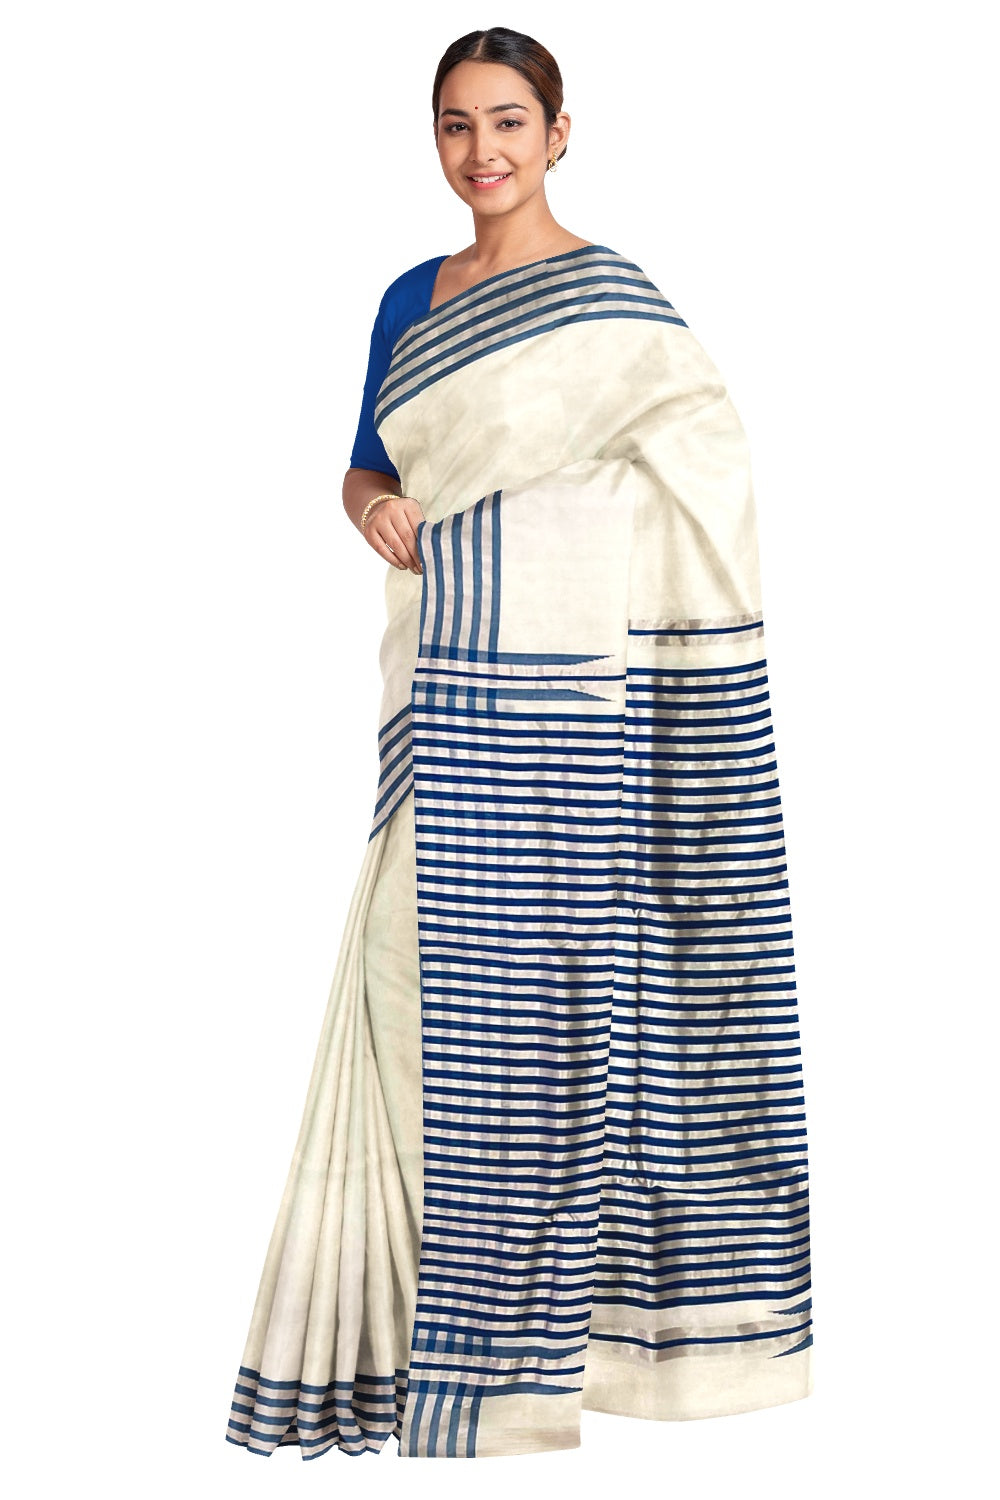 Southloom Premium Handloom Silver Kasavu and Blue Katti Kara Saree with Lines Design 30 Inch Pallu